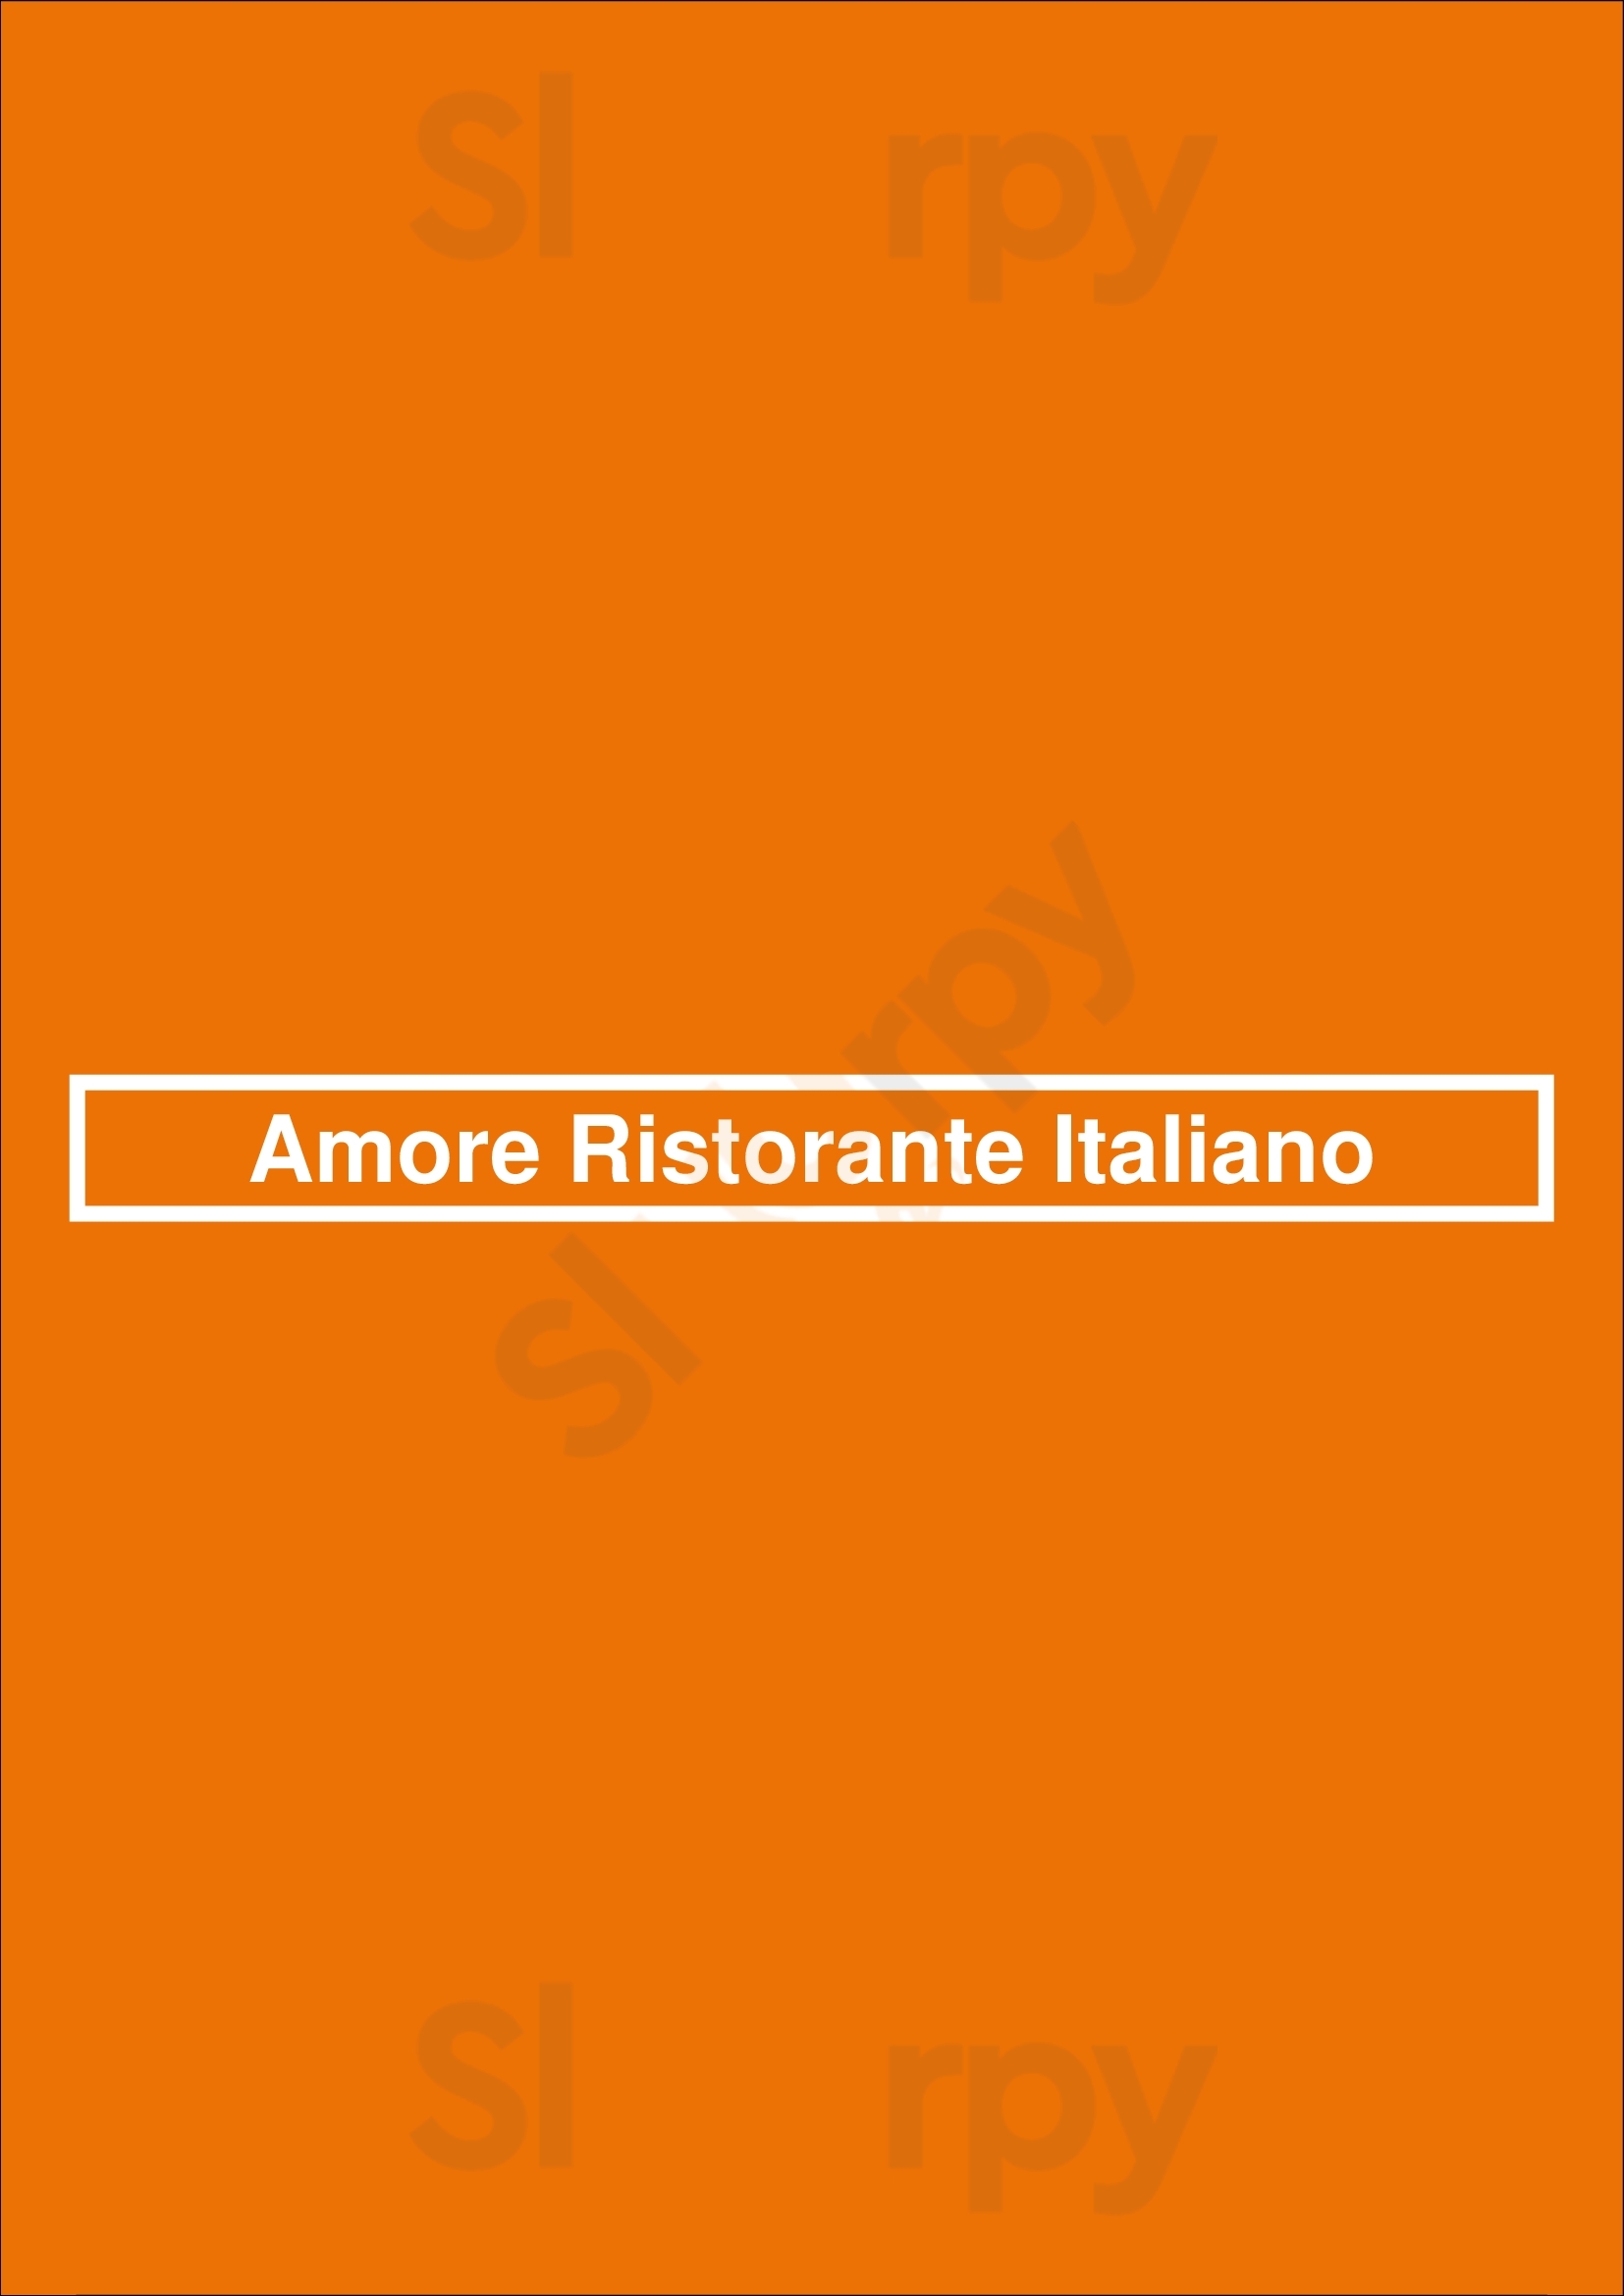 Amore Ristorante Italiano Birmingham Menu - 1